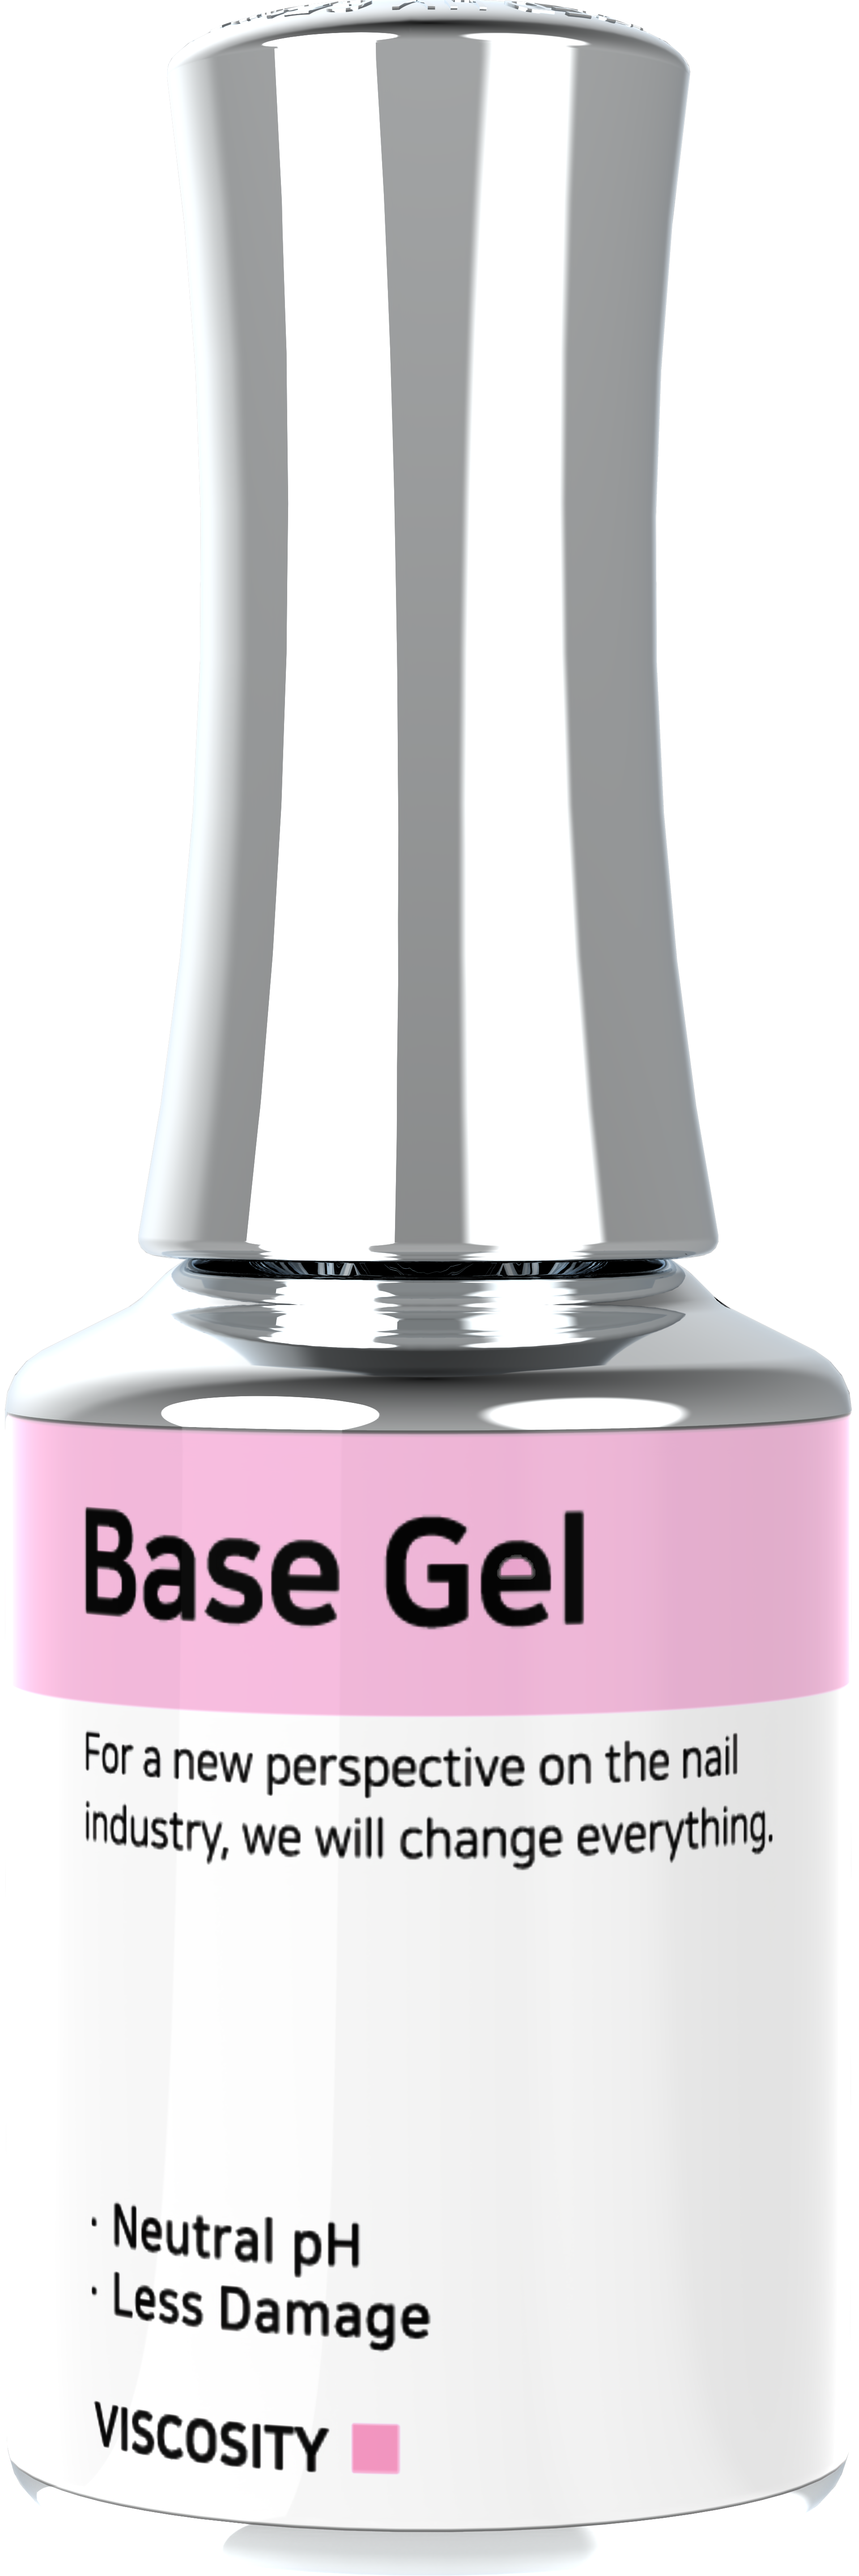 Acid free base gel